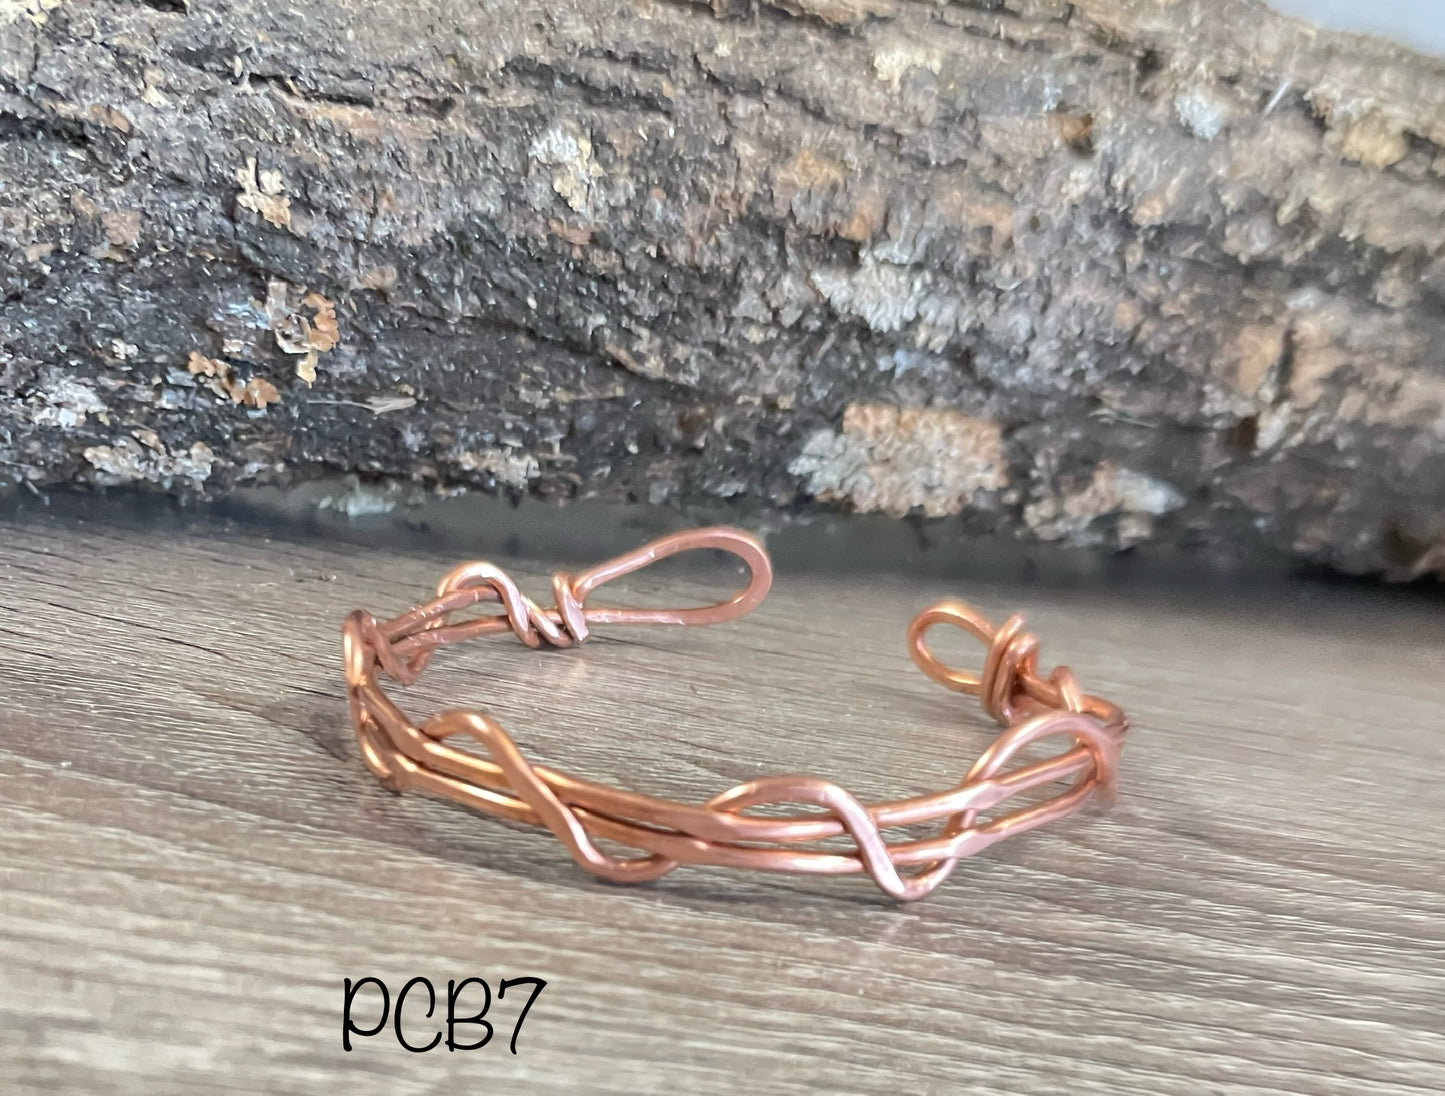 Twisted Copper Bracelet